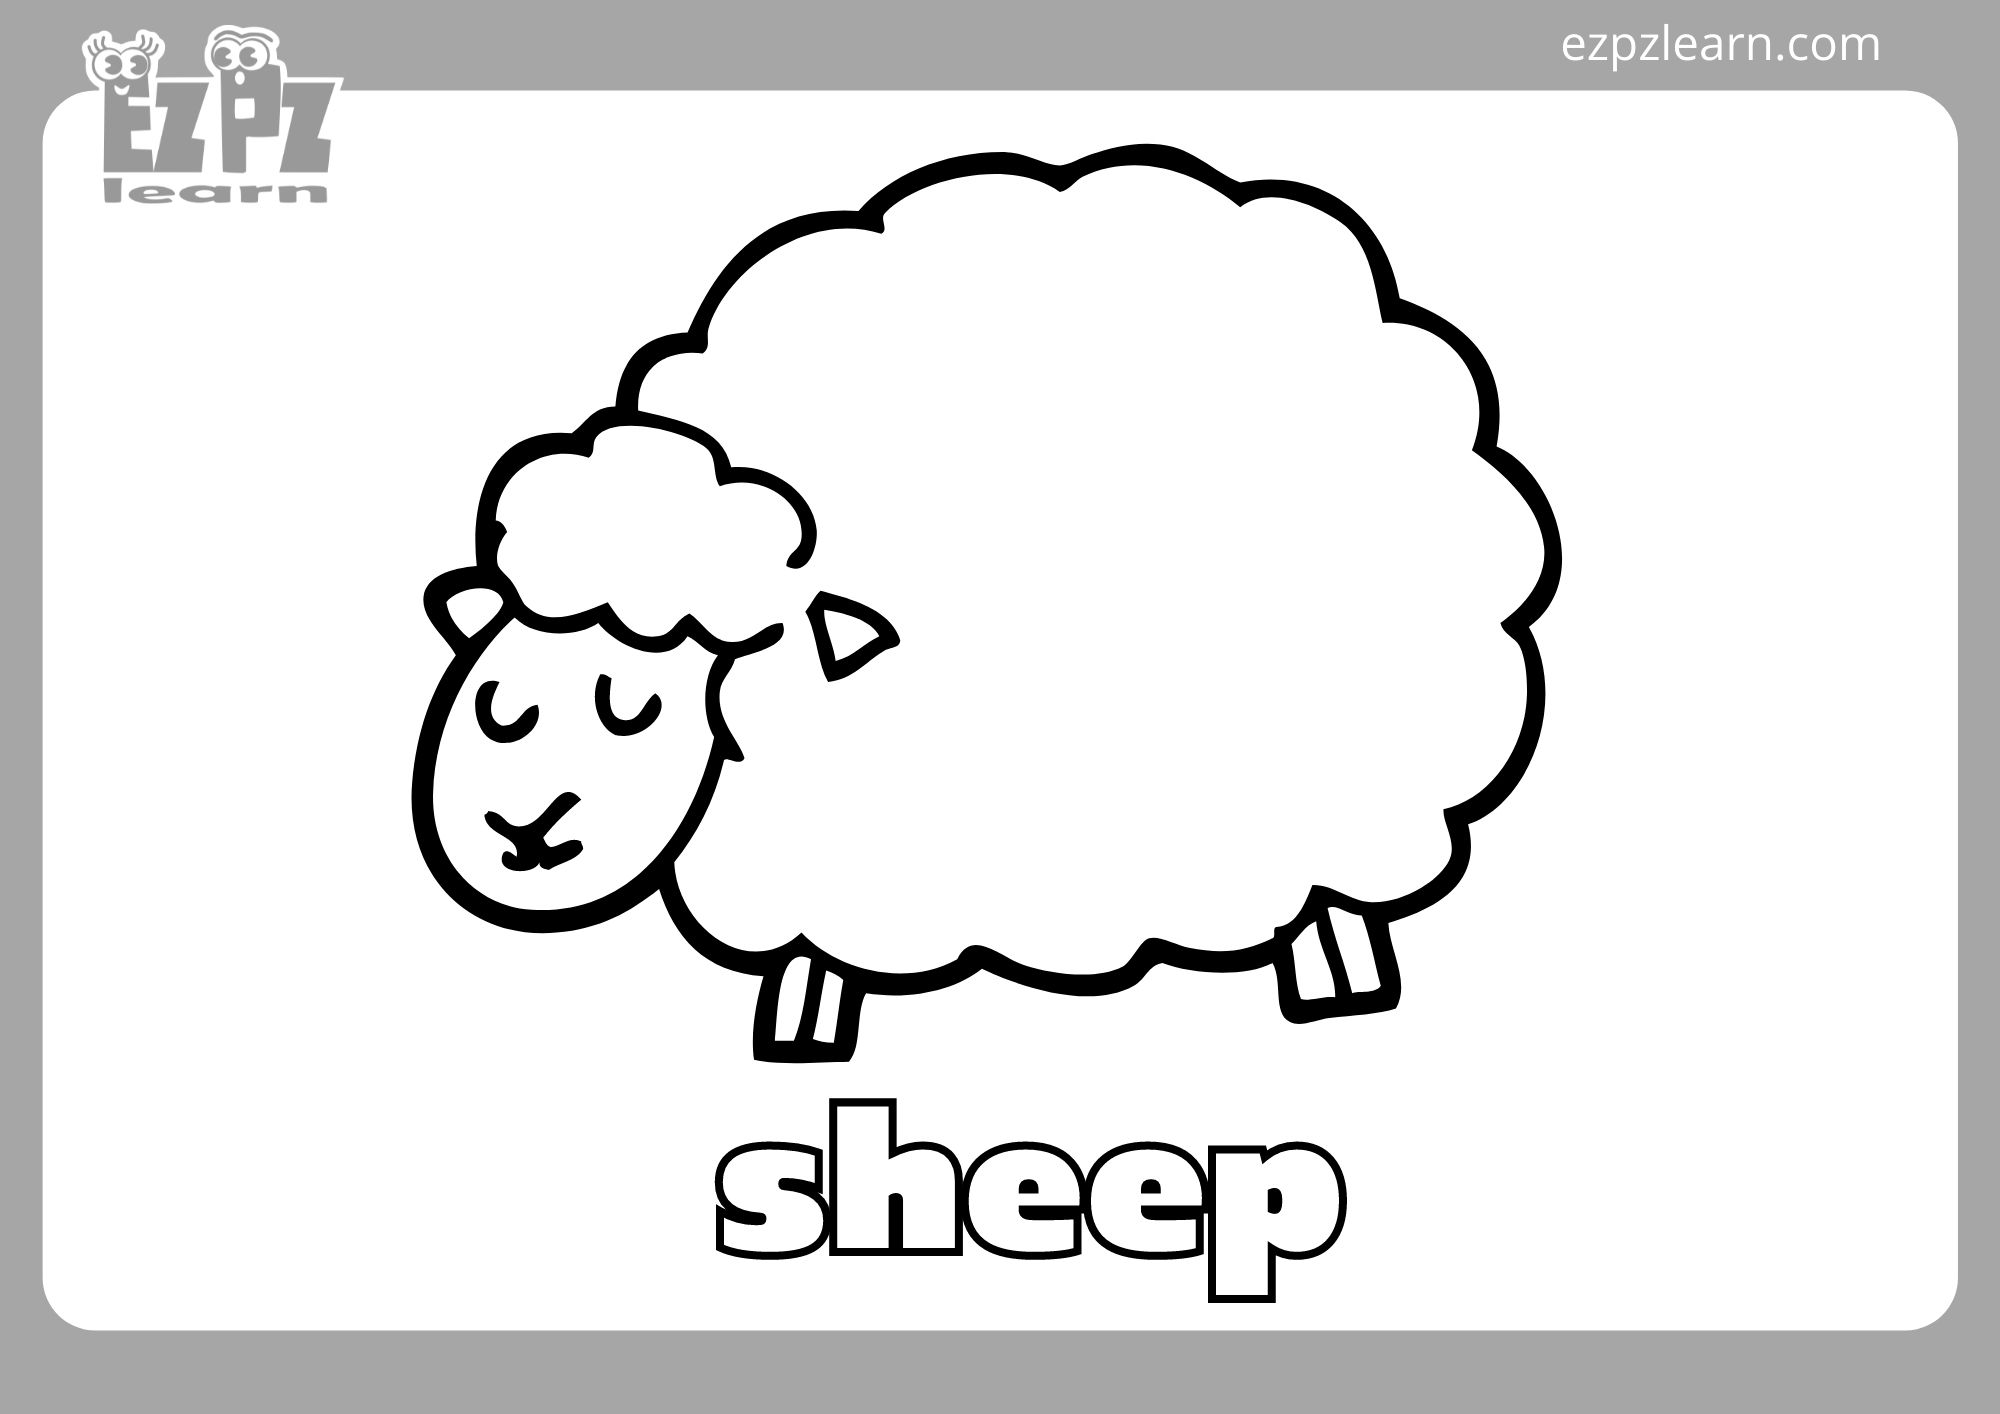 Sheep Coloring Page   Ezpzlearn.com